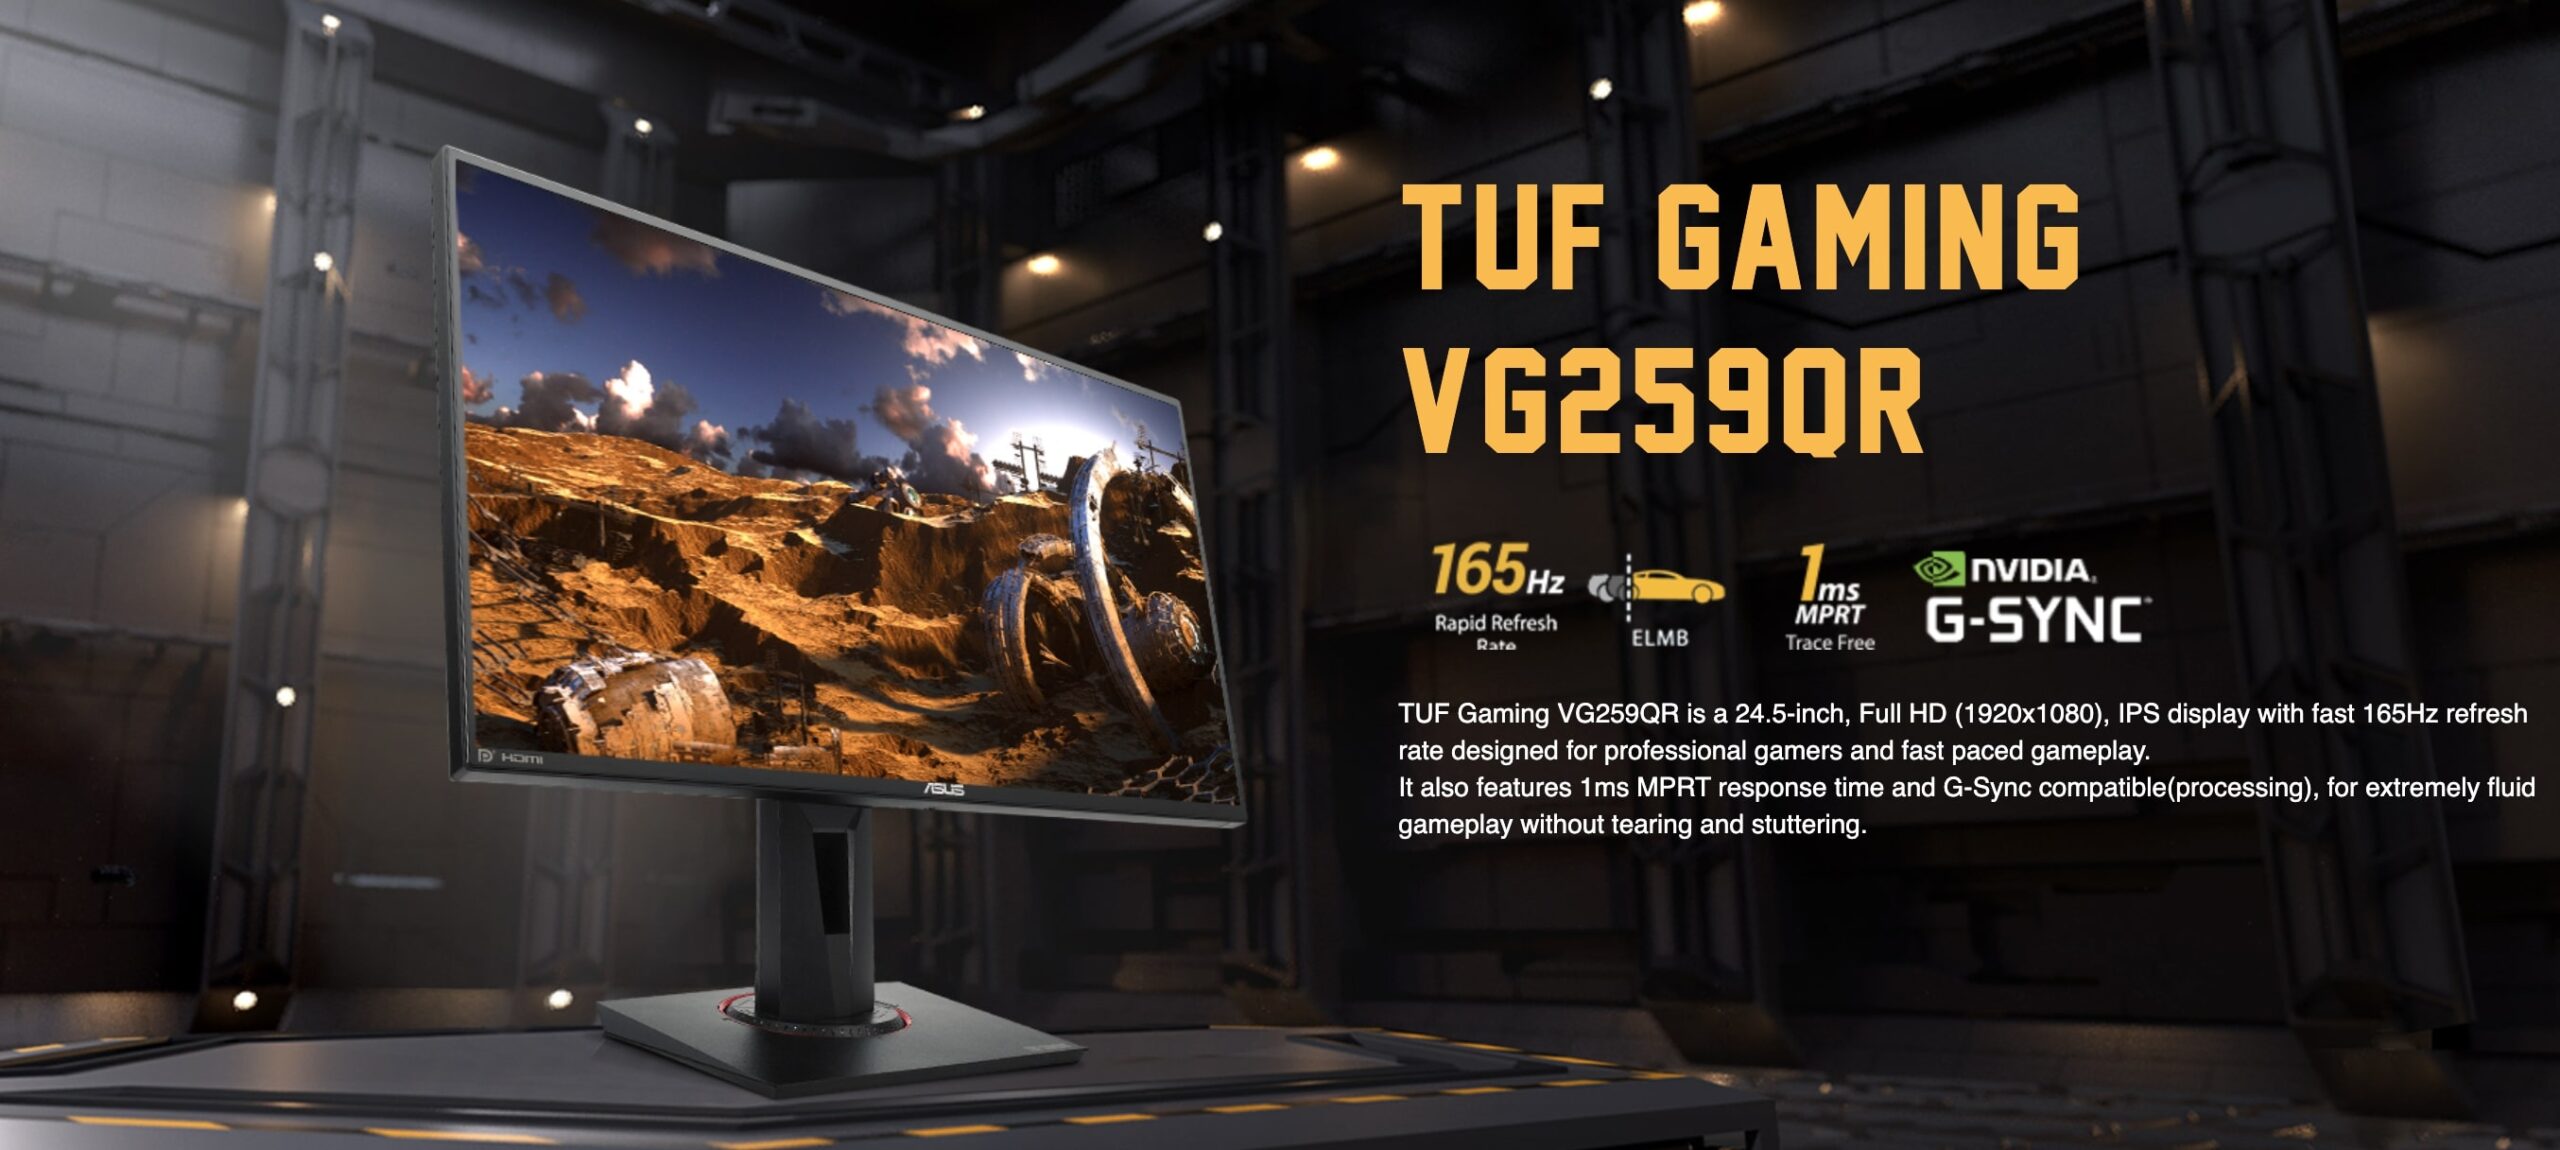 Asus-TUF-Gaming-VG259QR-Product-Description-1